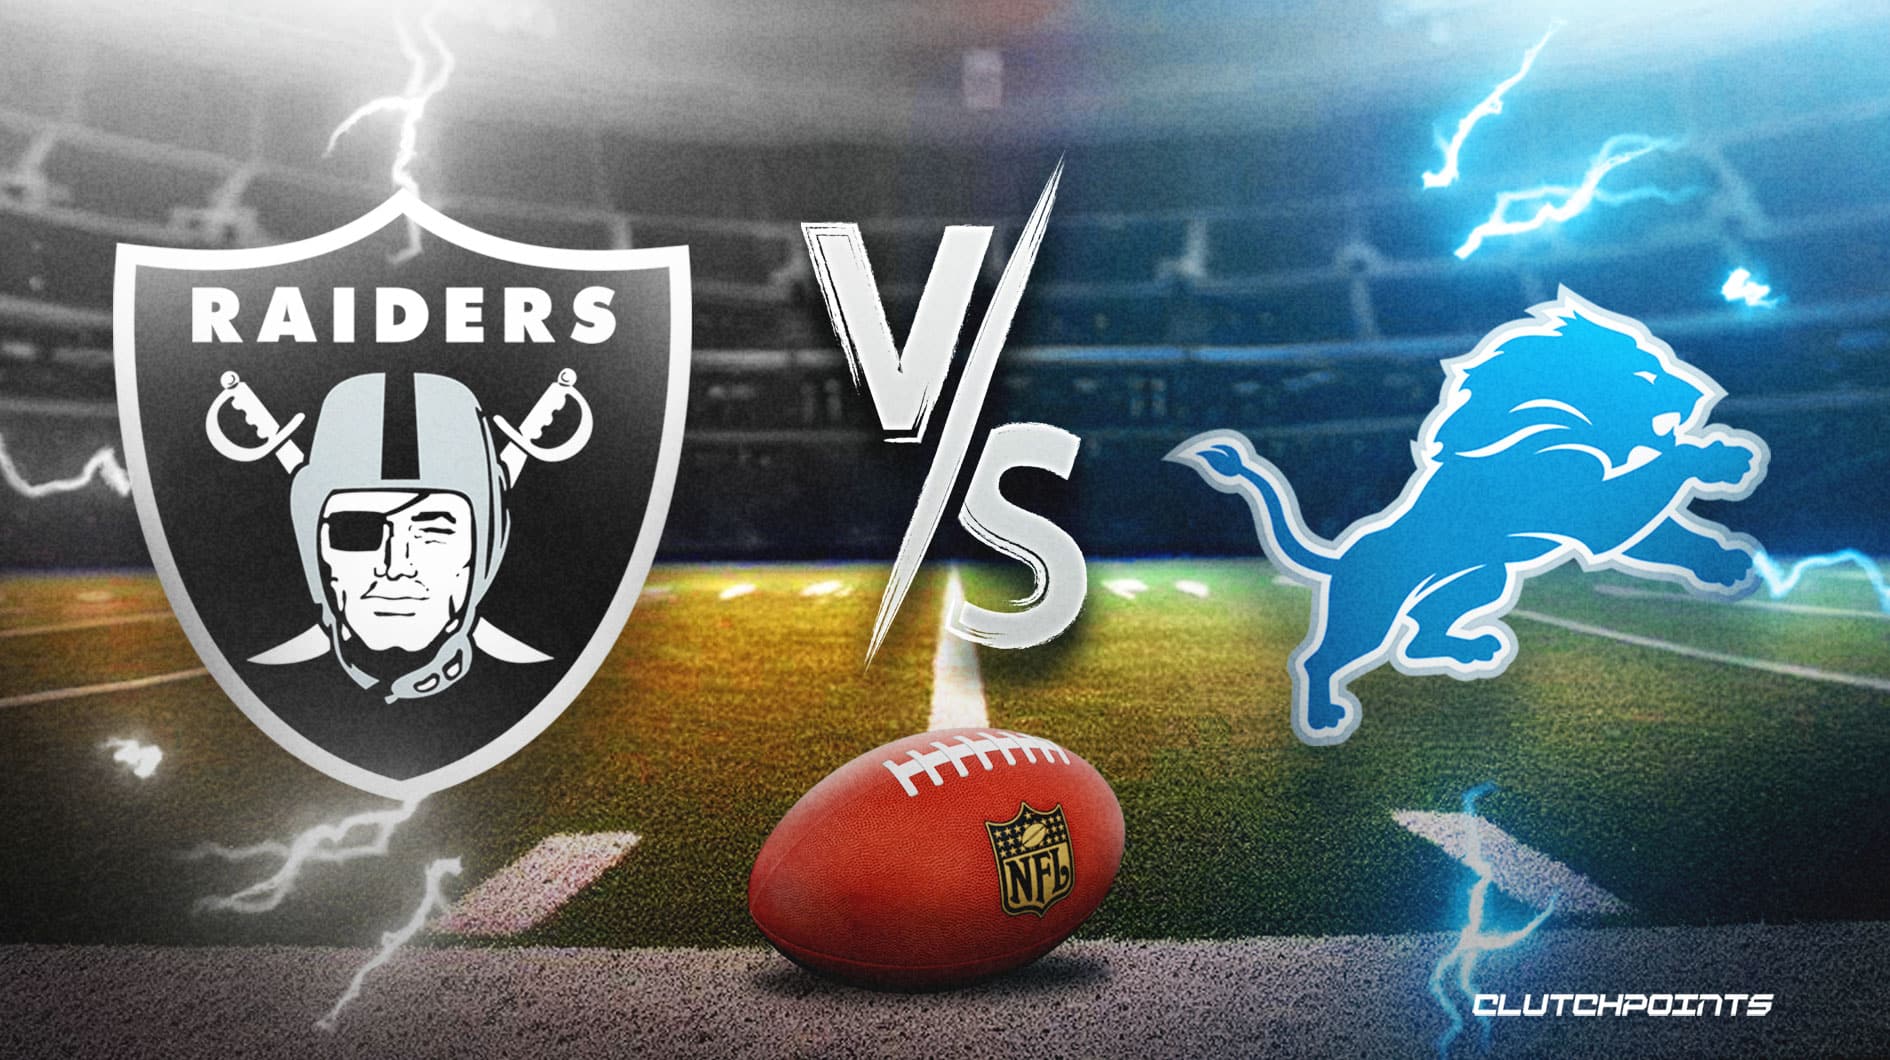 RaidersLions prediction, odds, pick, how to watch NFL Week 8 game